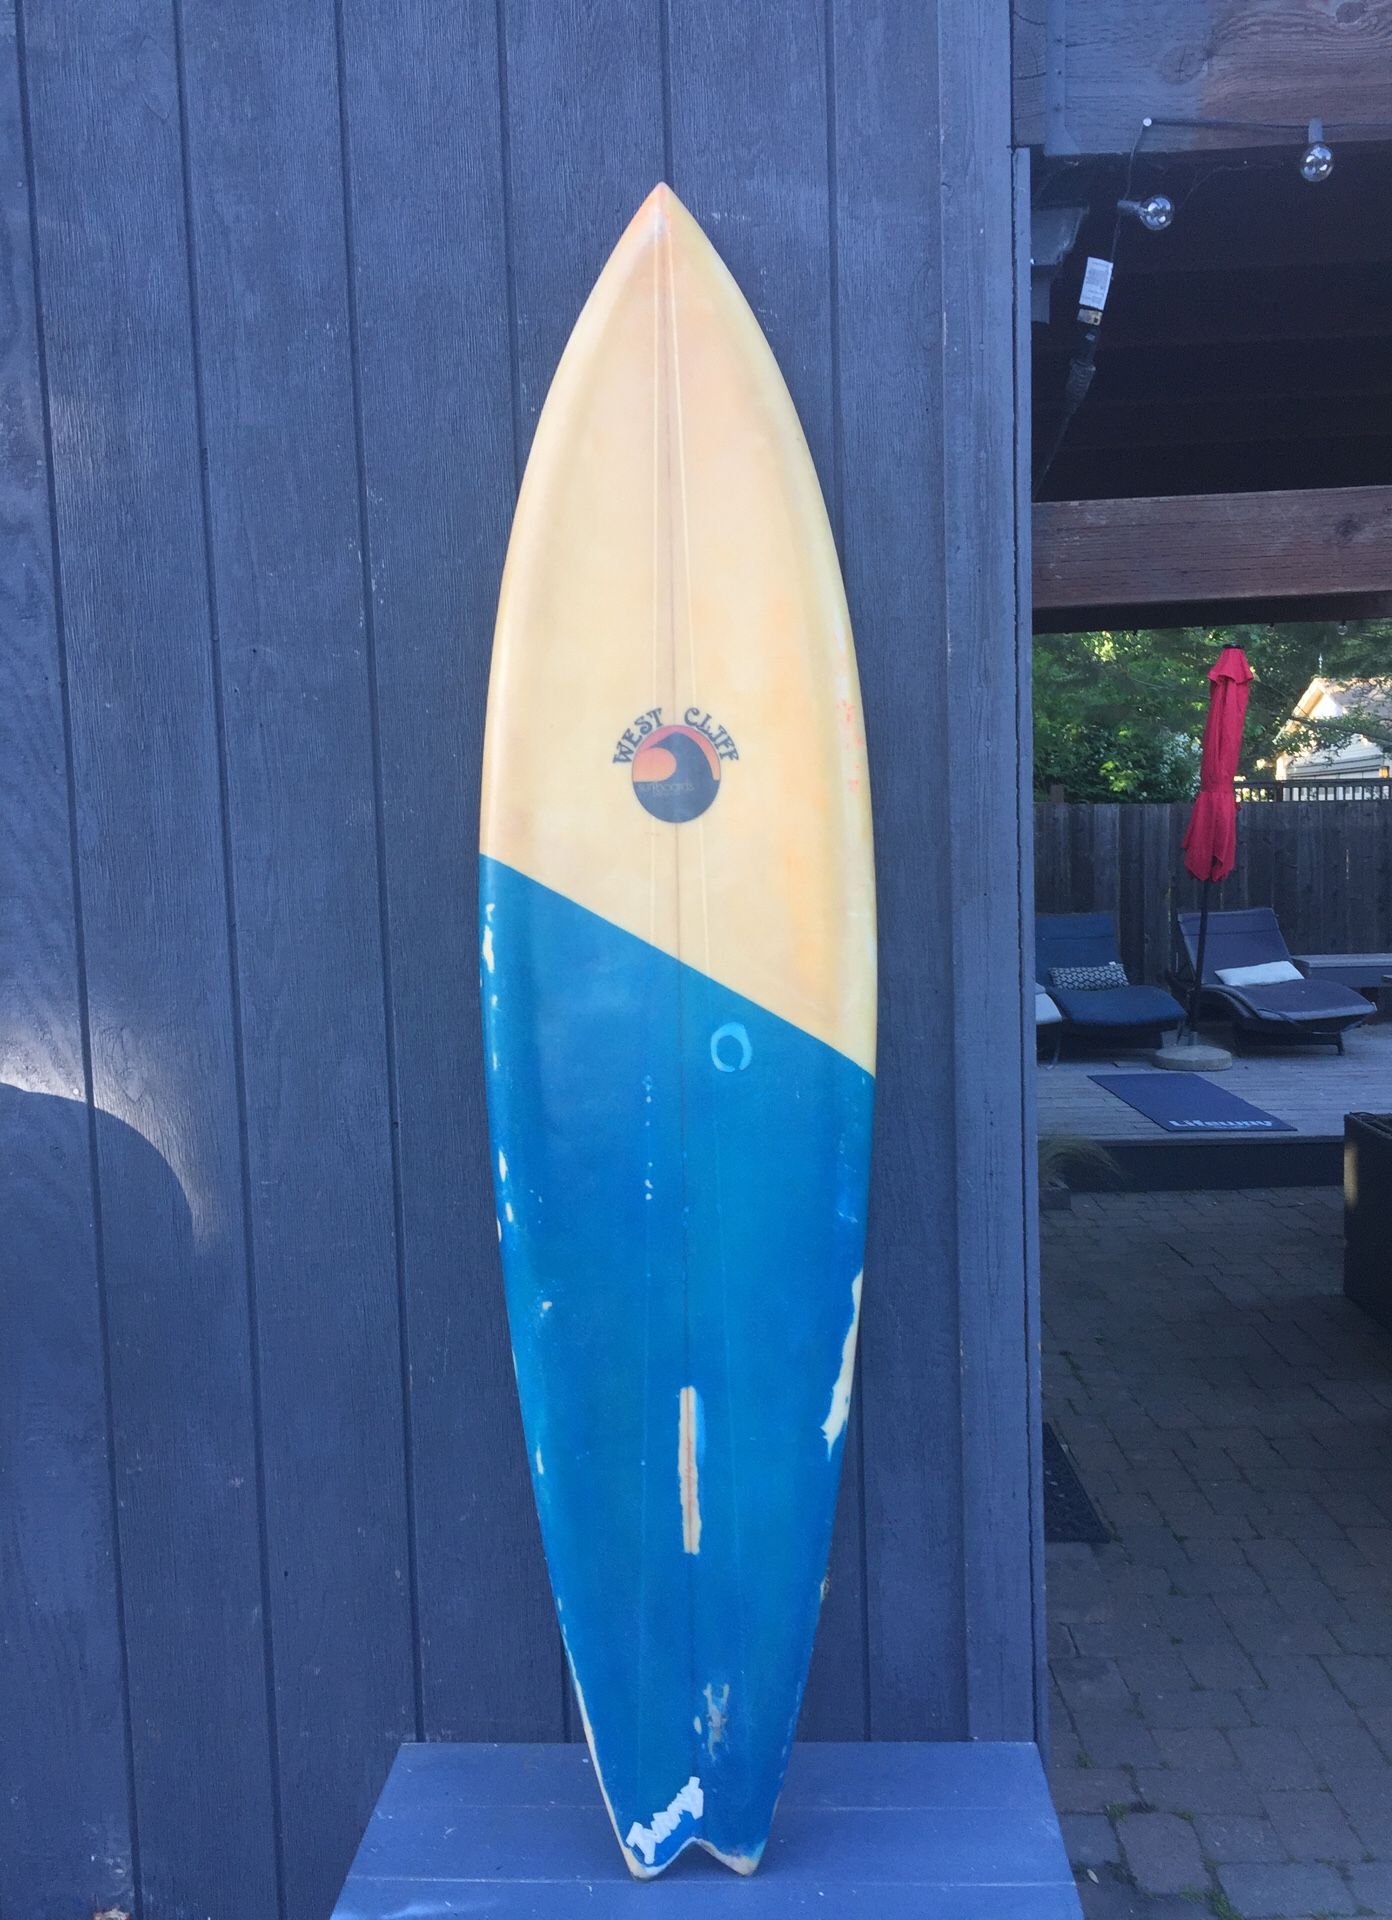 Old surfboard